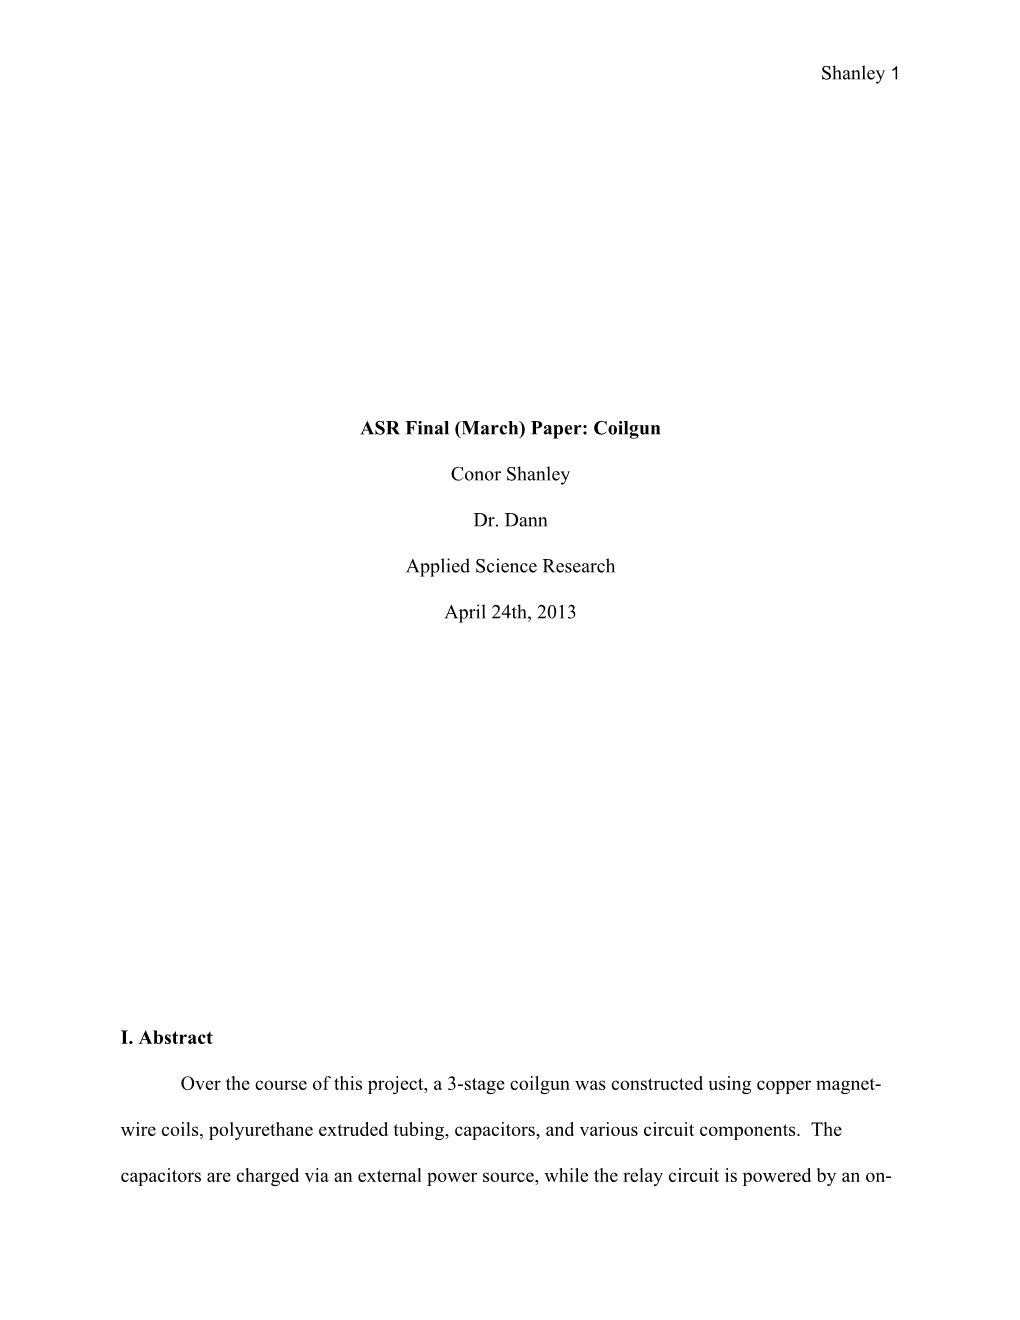 Paper: Coilgun Conor Shanley Dr. Dann